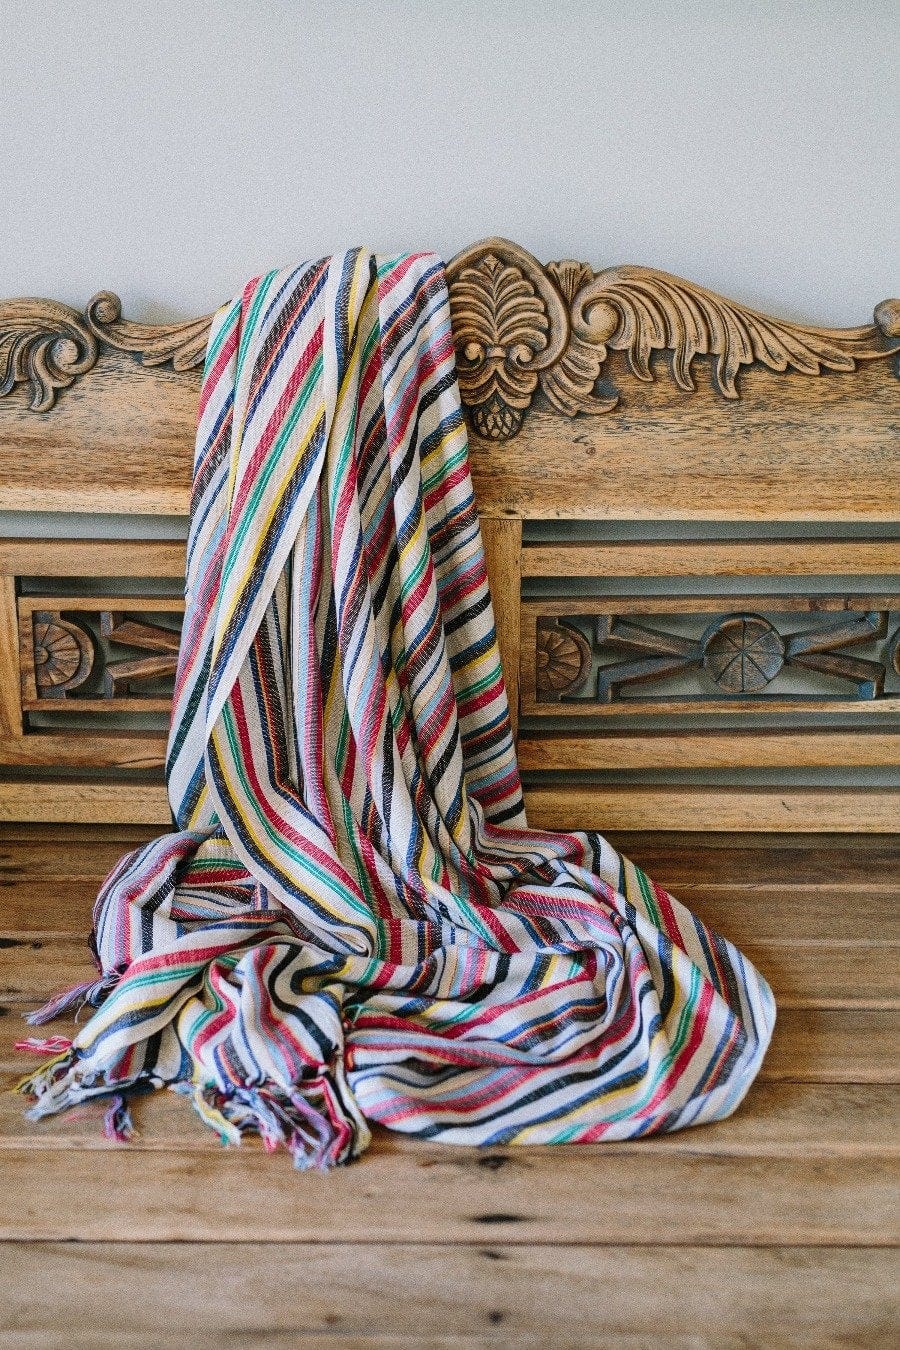 Turkish Towel - Kelebek II, 100cm x 195cm